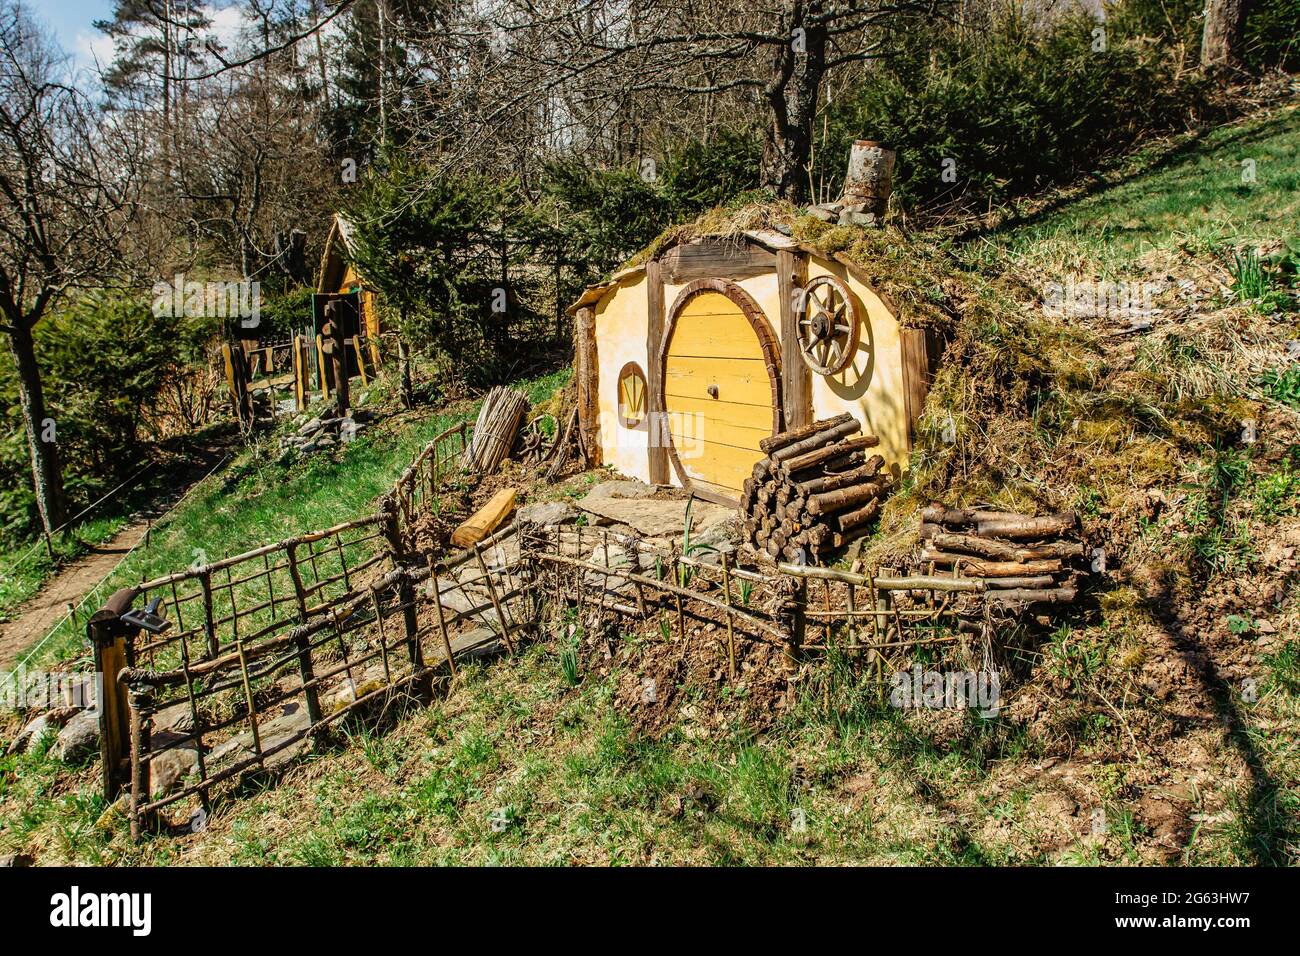 Hobbit casa in ceco Hobbiton con tre buchi Hobbit e carino giallo doors.Fairy racconto casa in Garden.Magic piccolo villaggio da fantasia film situato Foto Stock